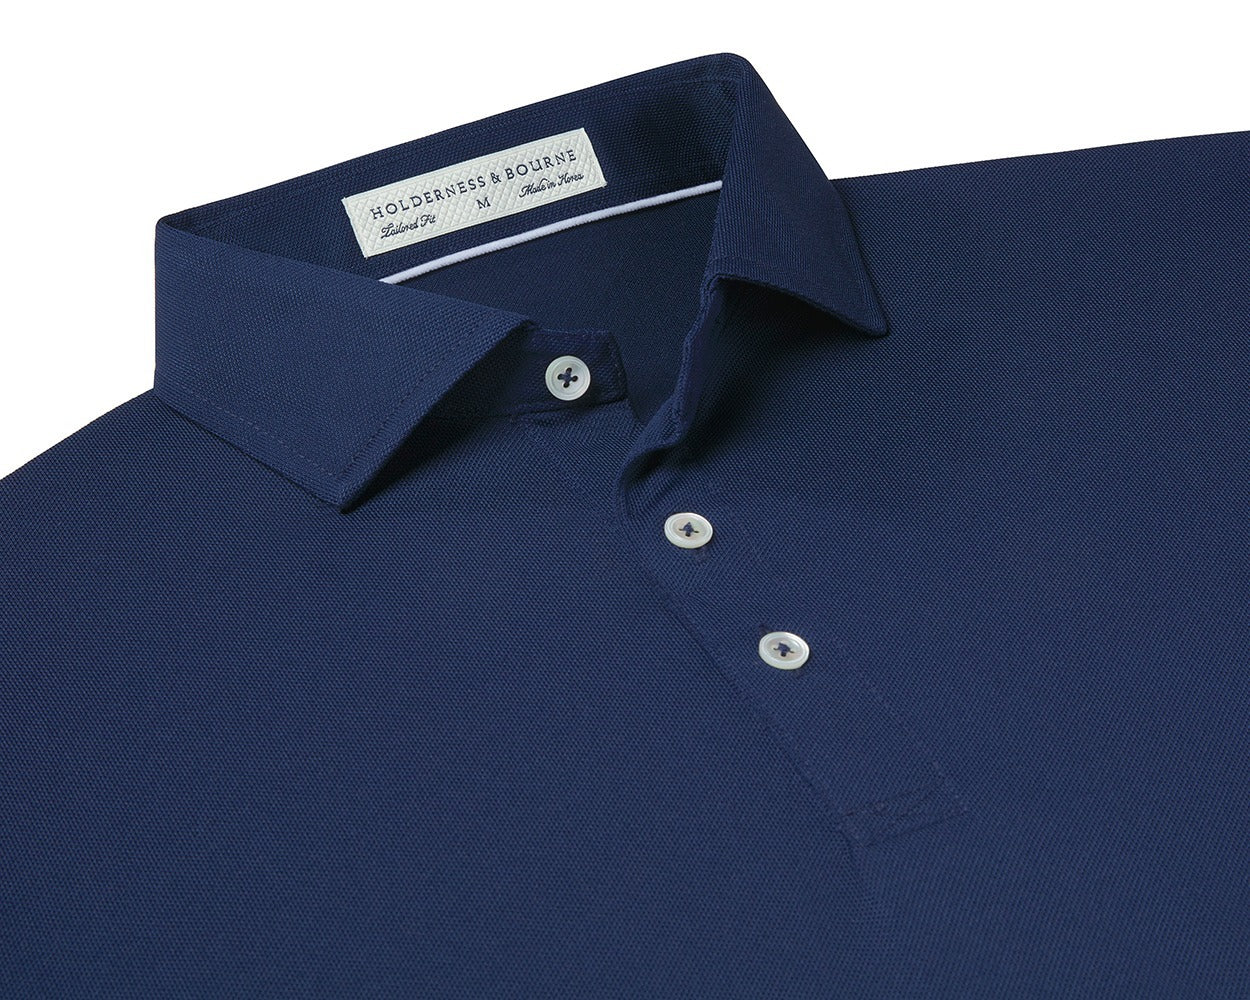 Folded Holderness and Bourne navy blue golf shirt.